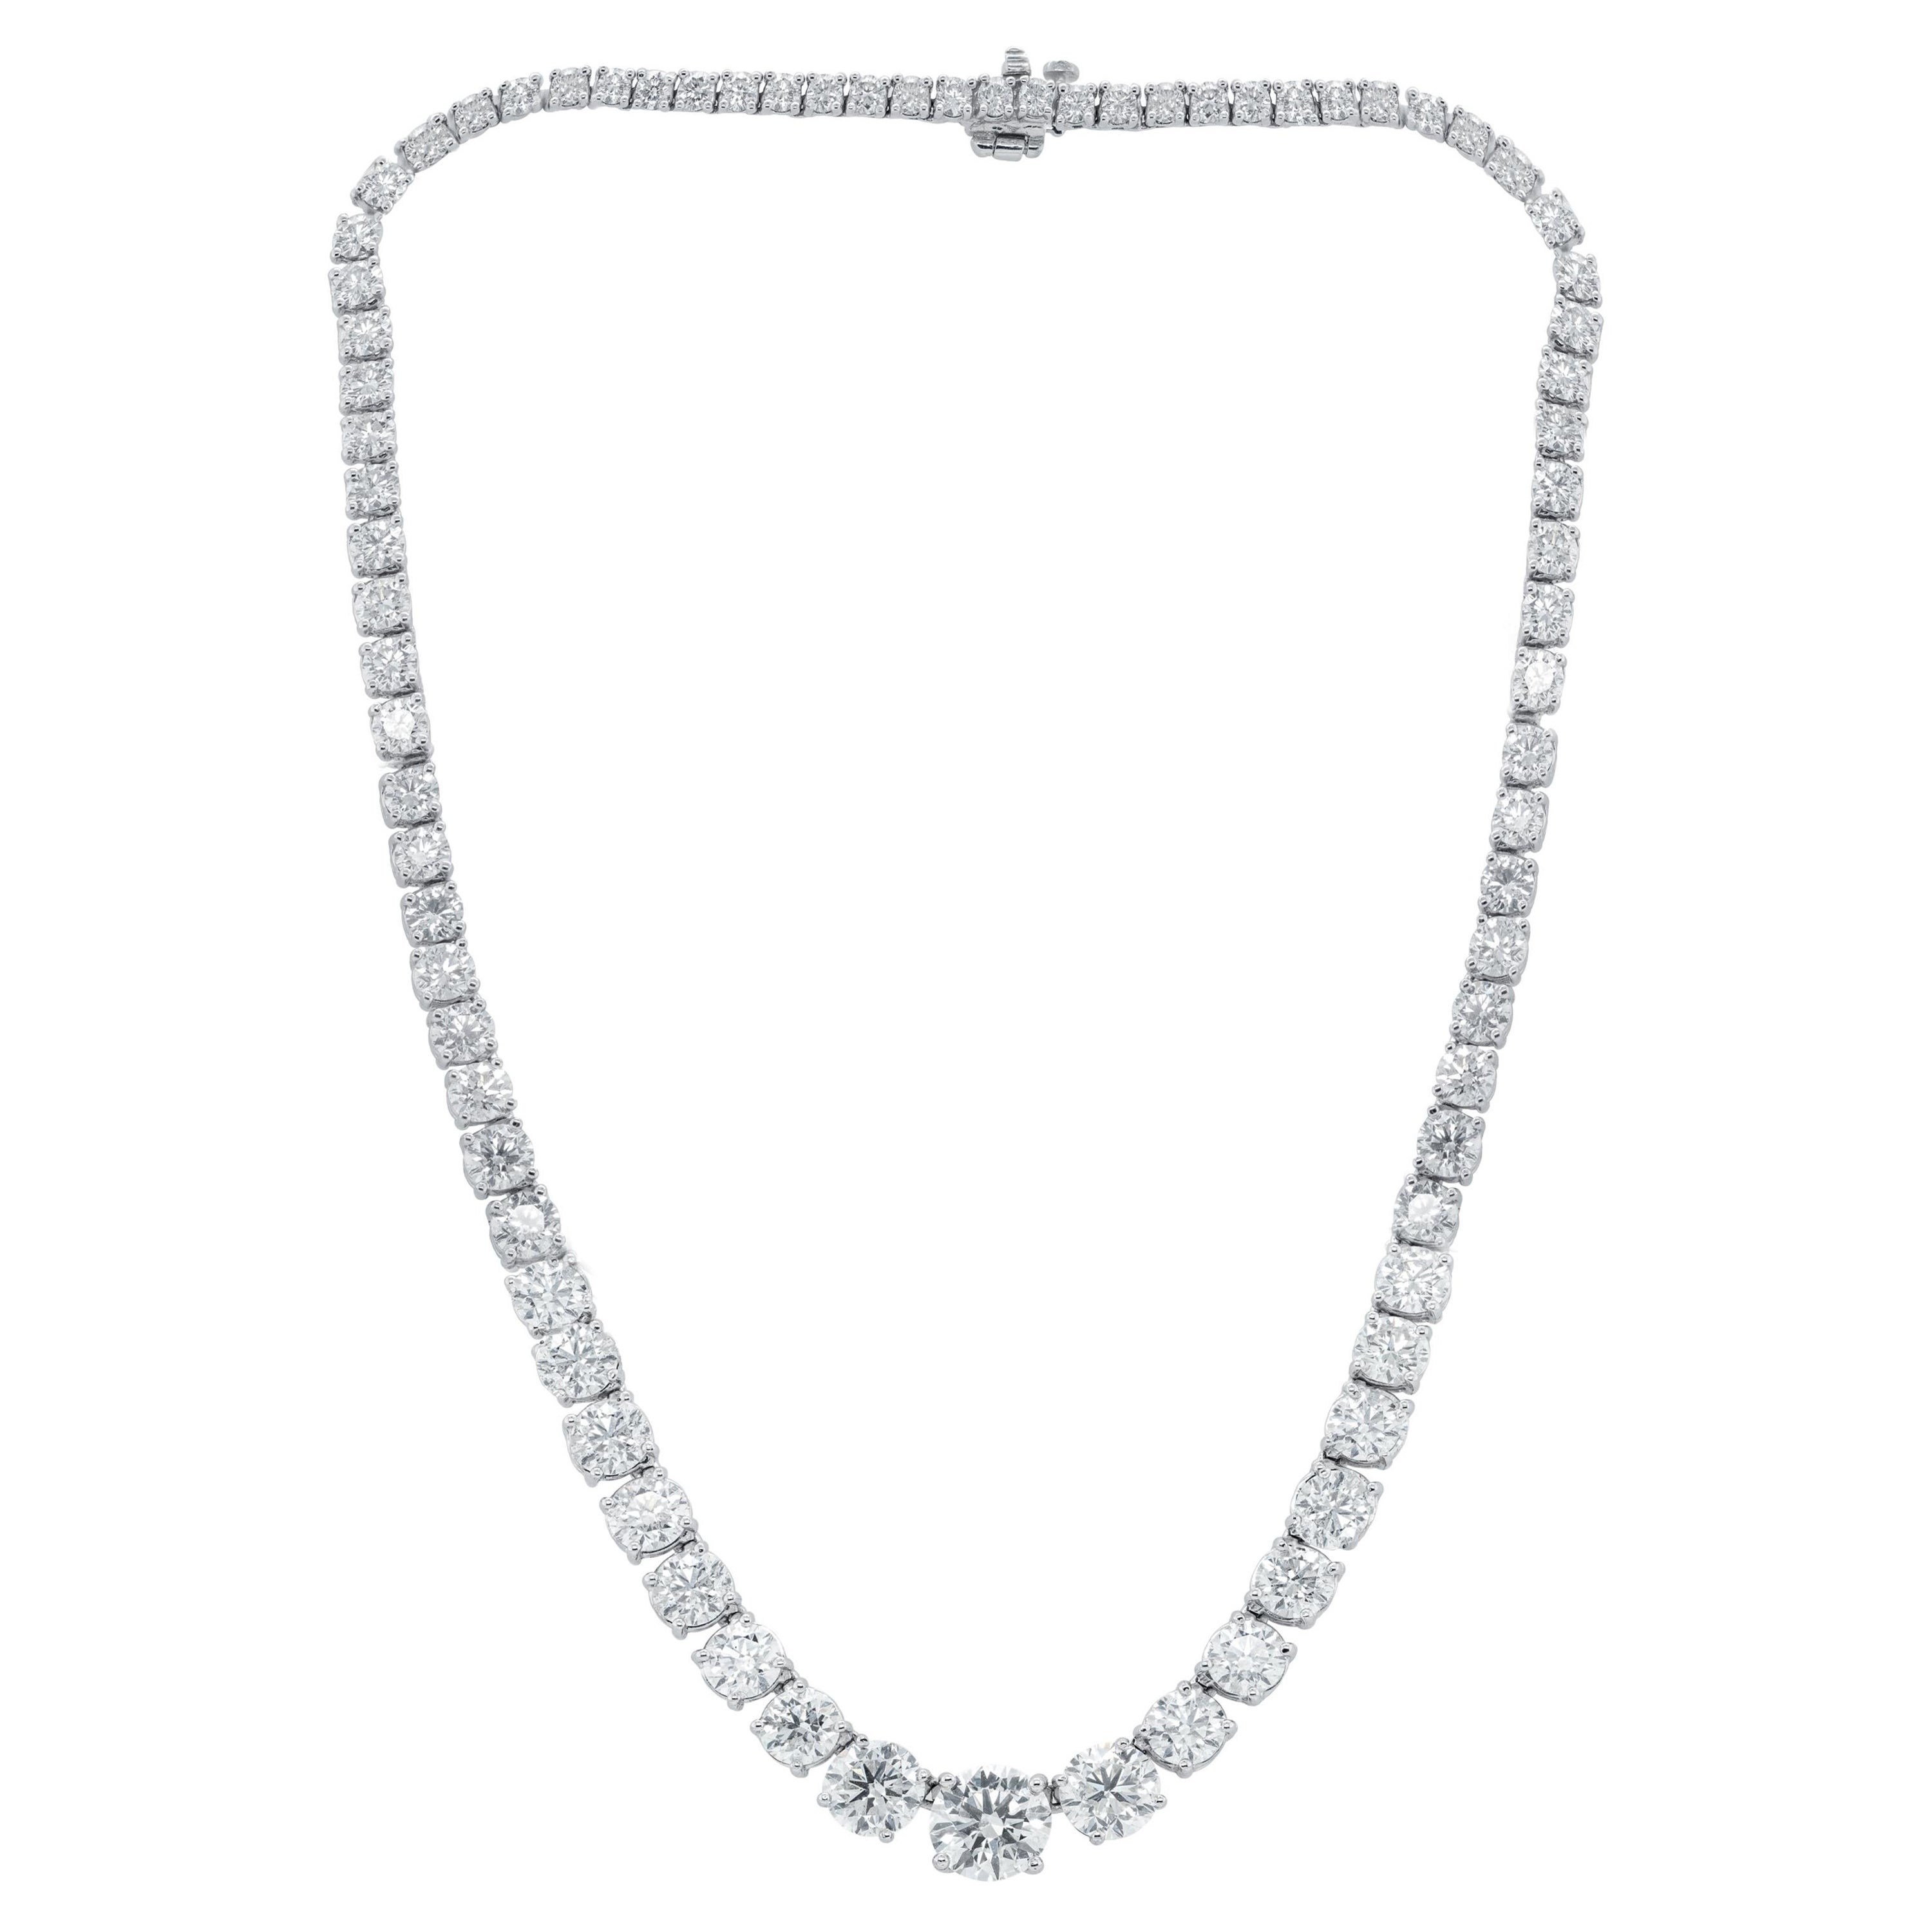 Diana M. 24.35 Carat Graduated Diamond Tennis Necklace